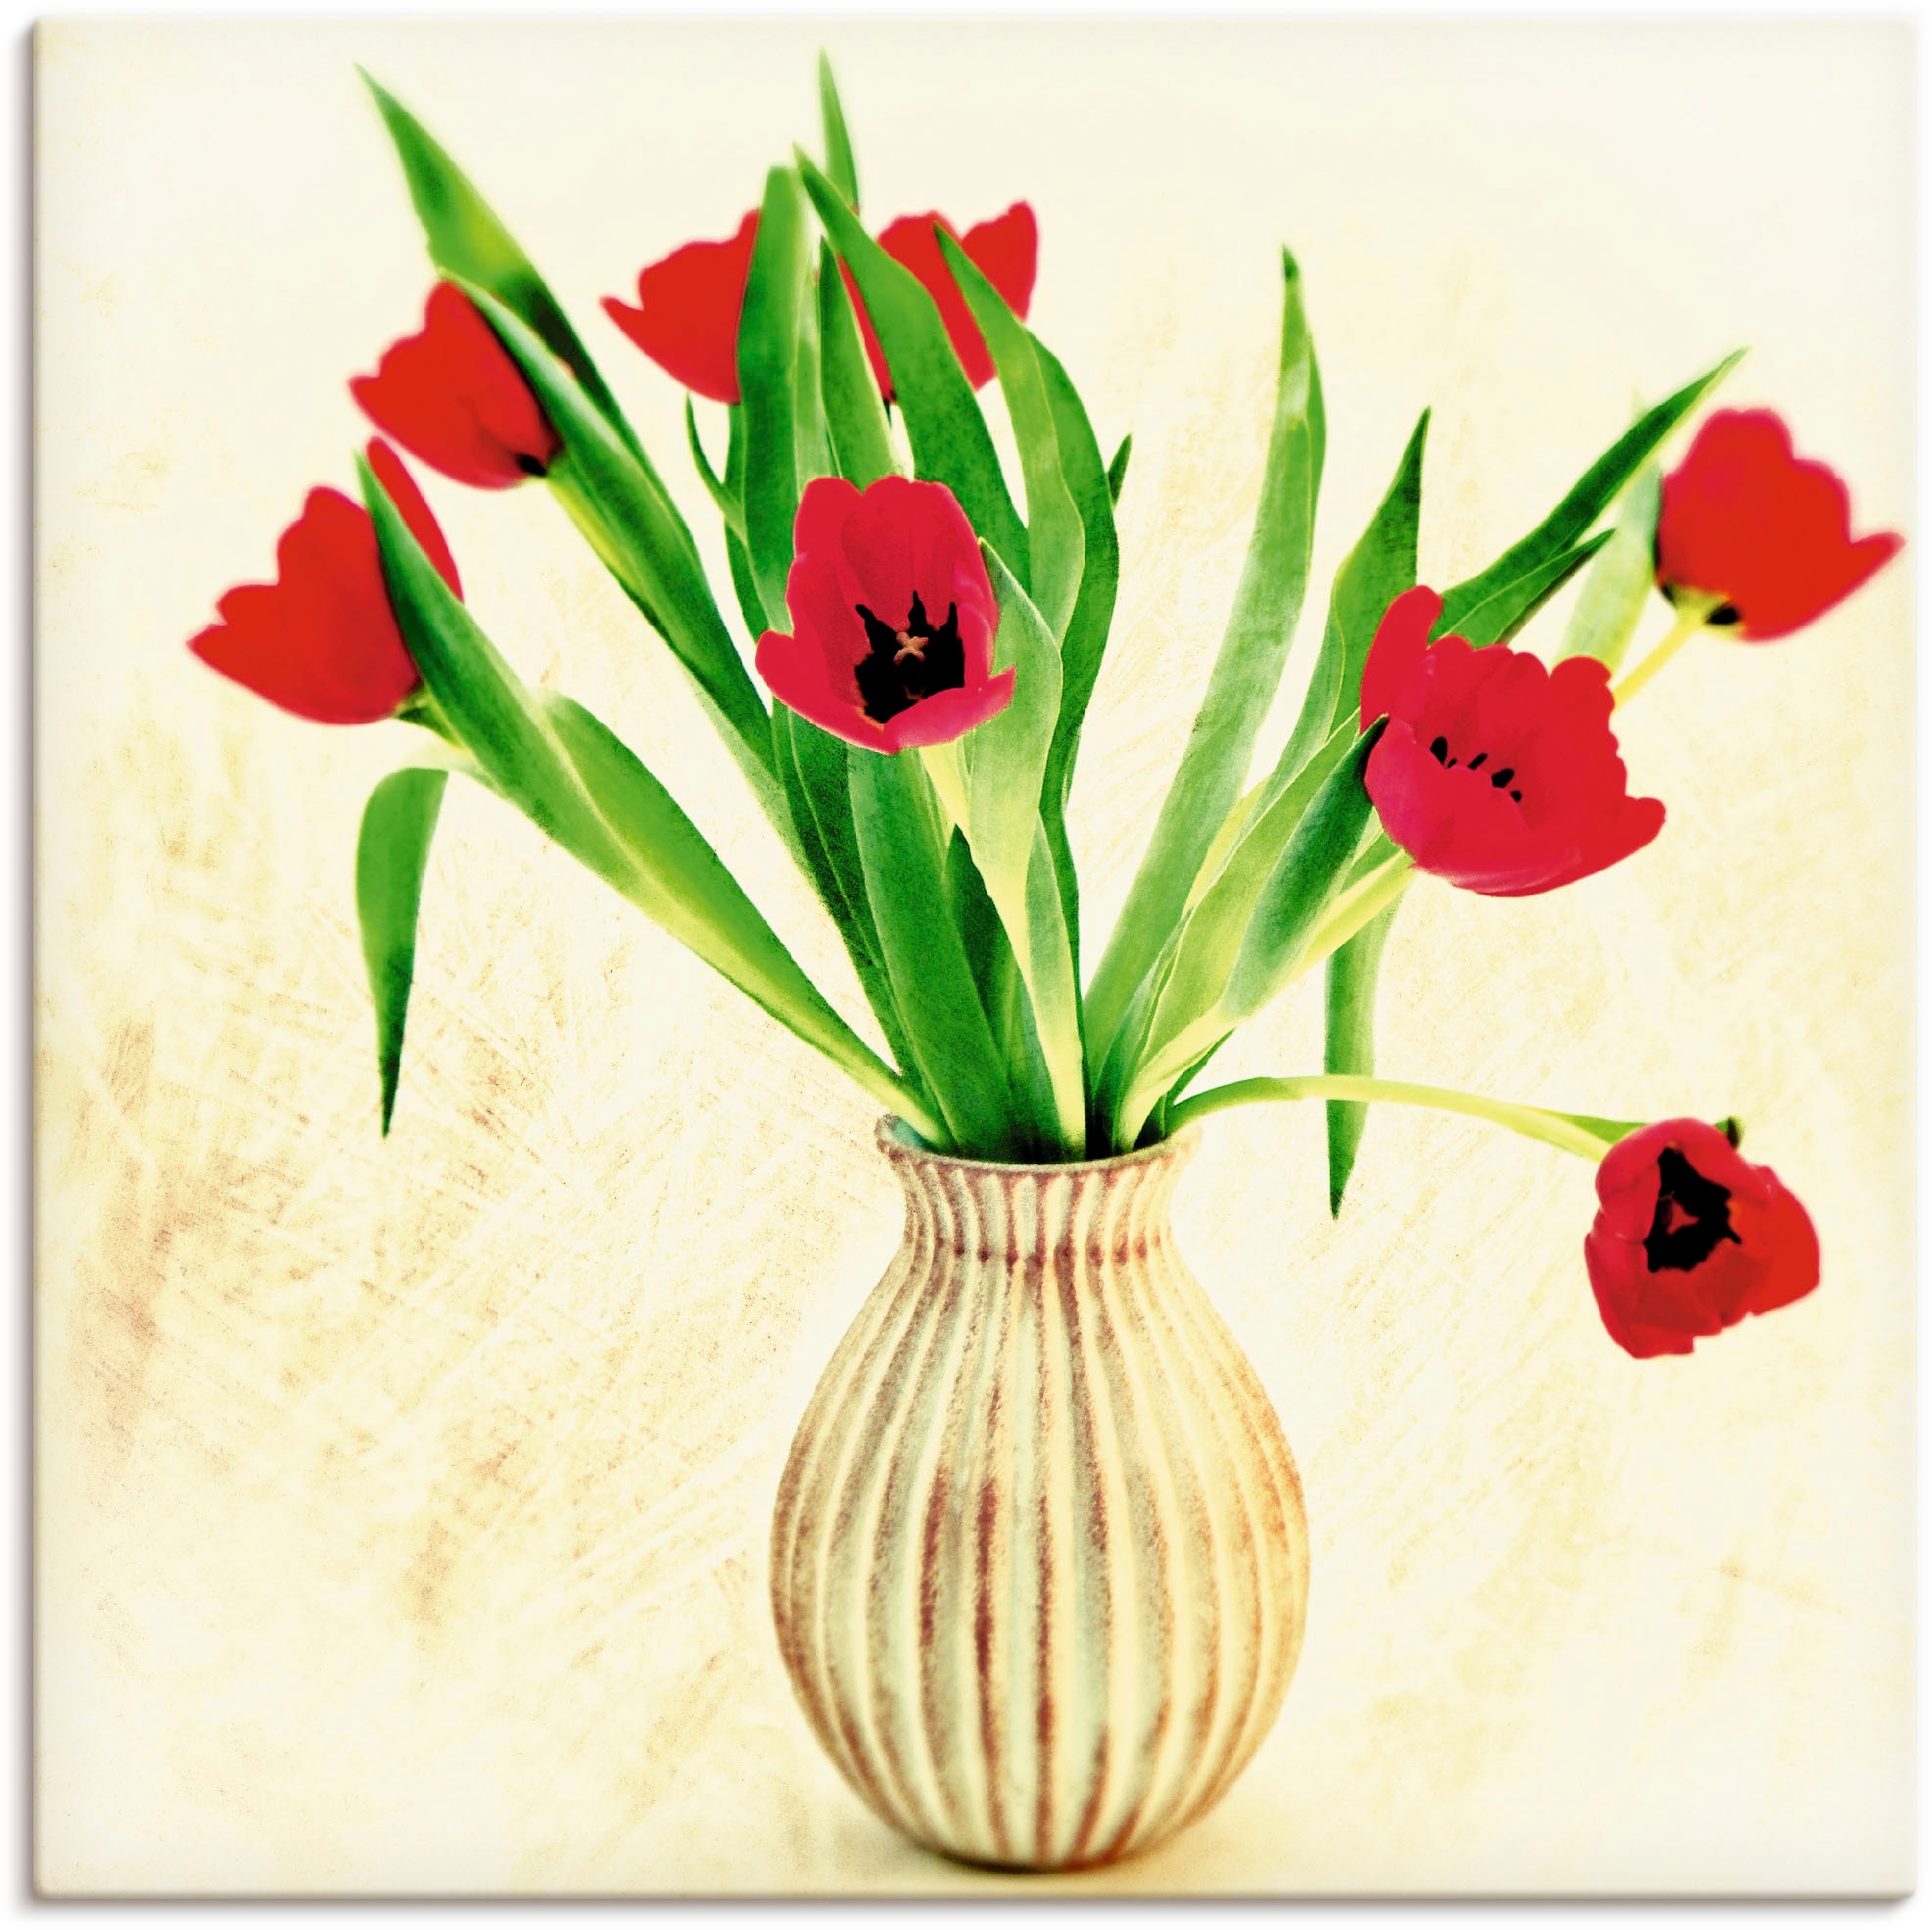 Artland Paveikslas »Rote Tulpen« Blumen (1 St....